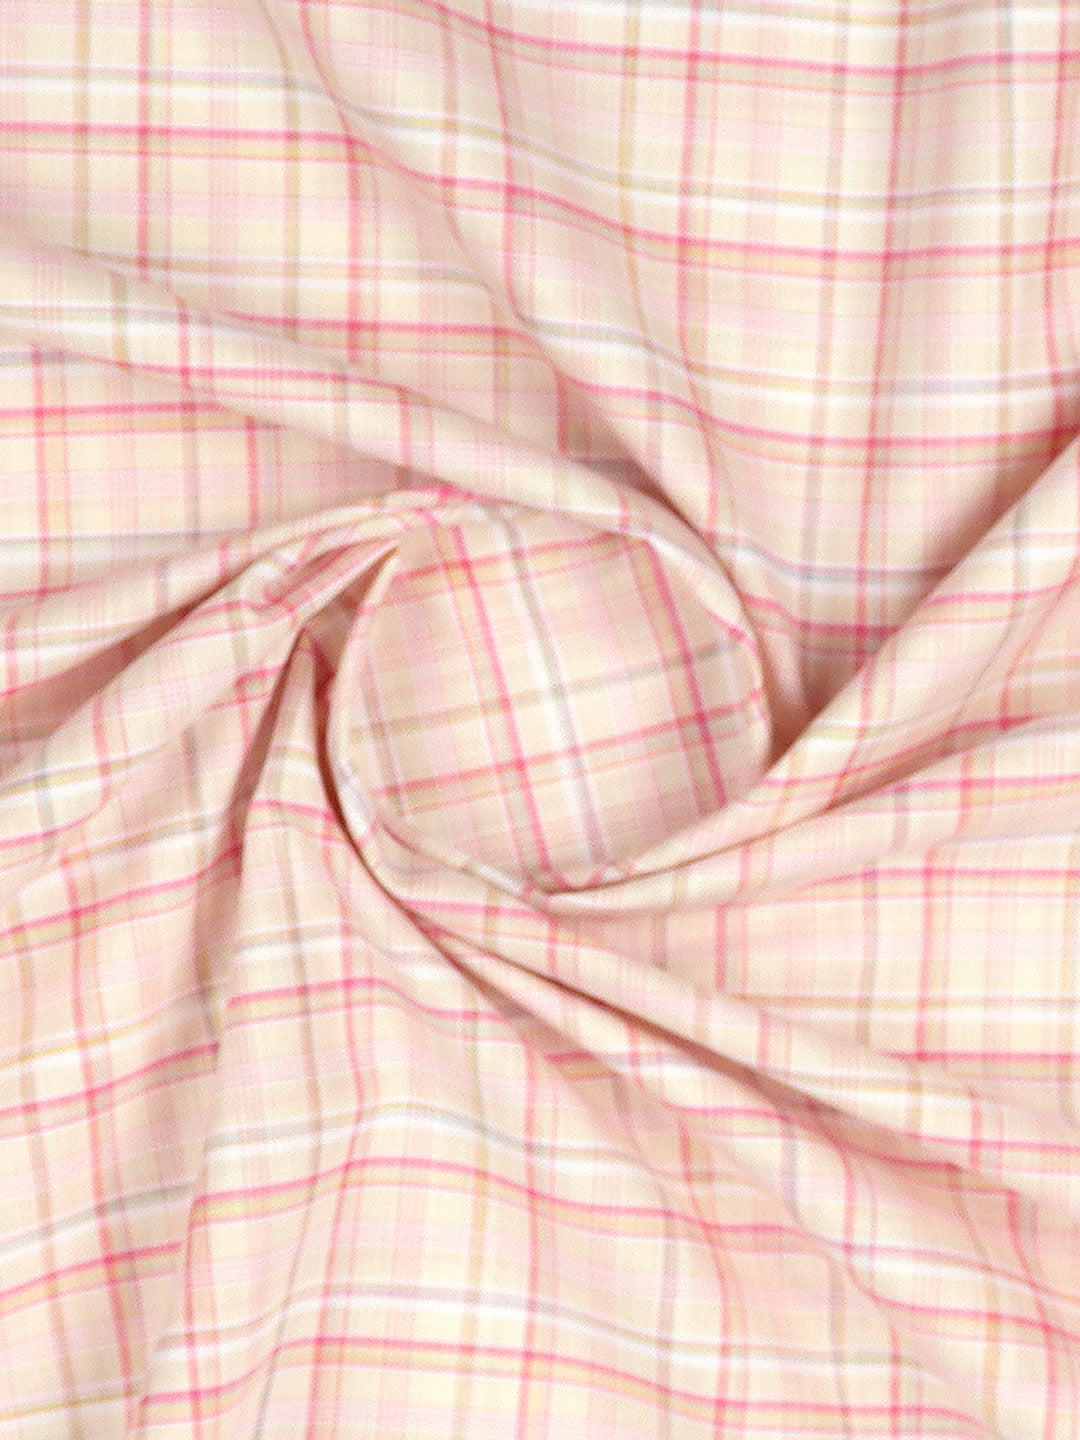 Cotton Blend Light Sandal & Pink Colour Checked Shirt Fabric Elight Gold